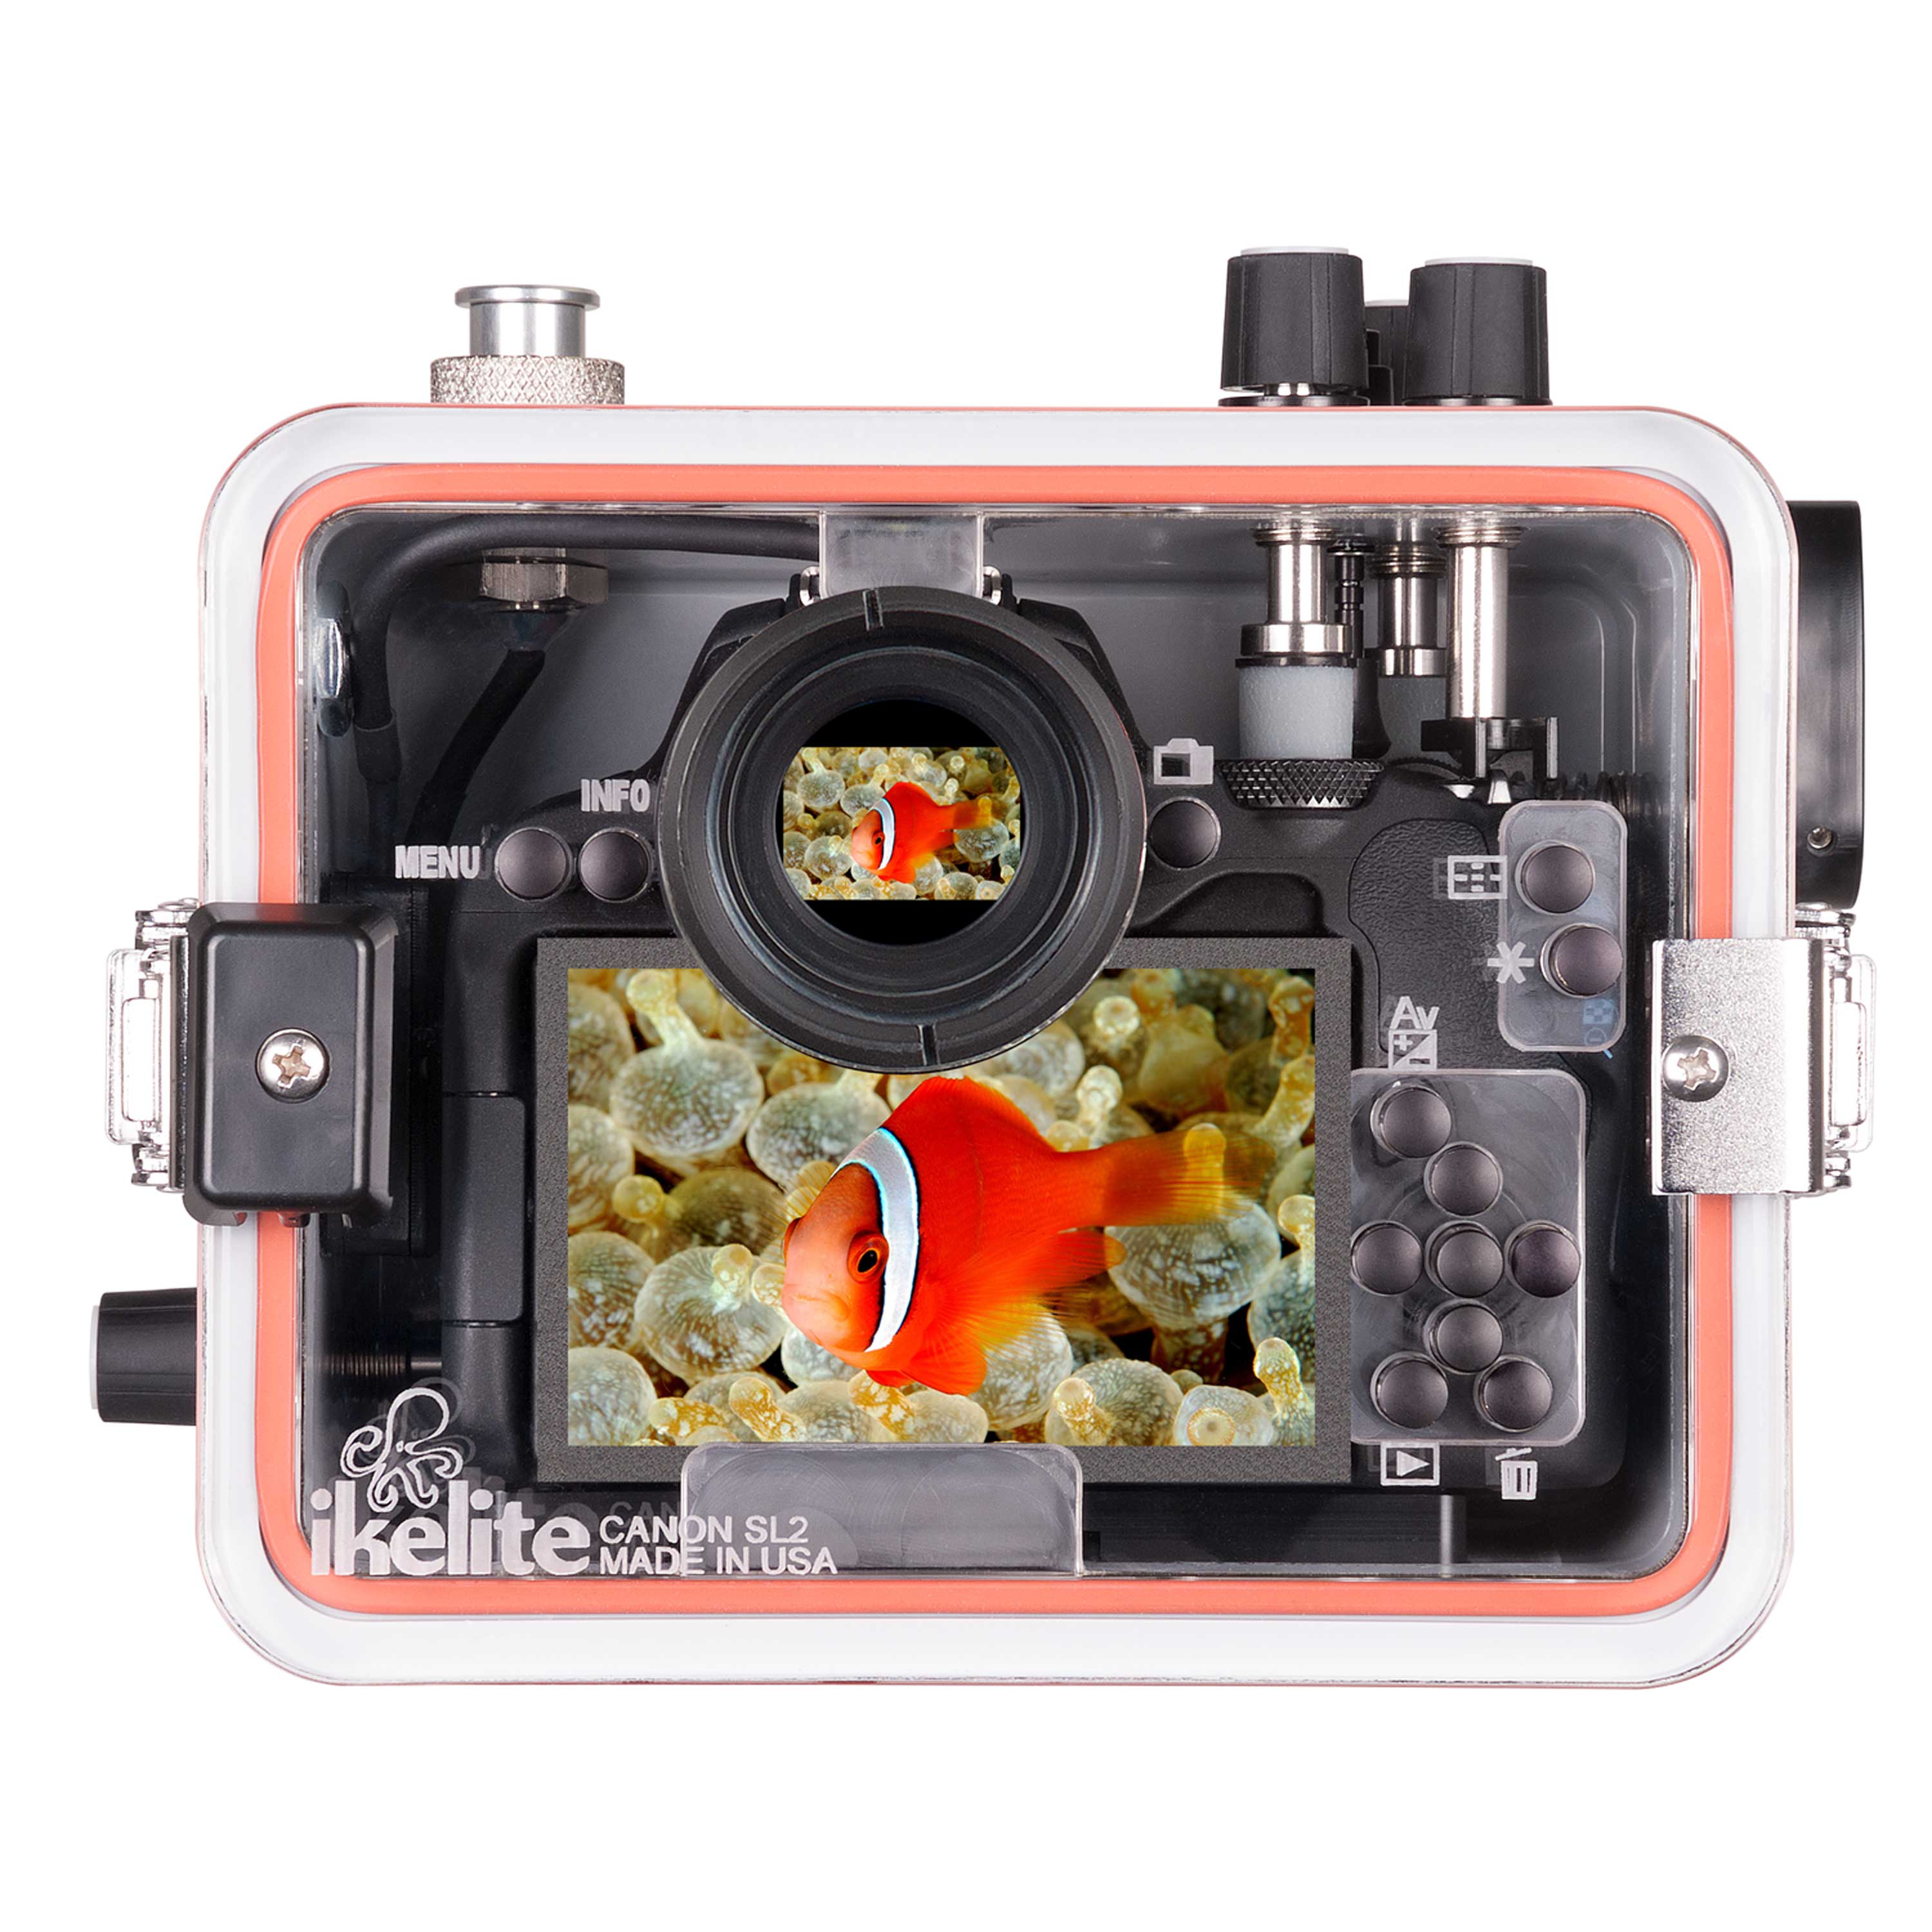 200DLM/C Underwater Housing and Canon Rebel SL2 Camera Kit